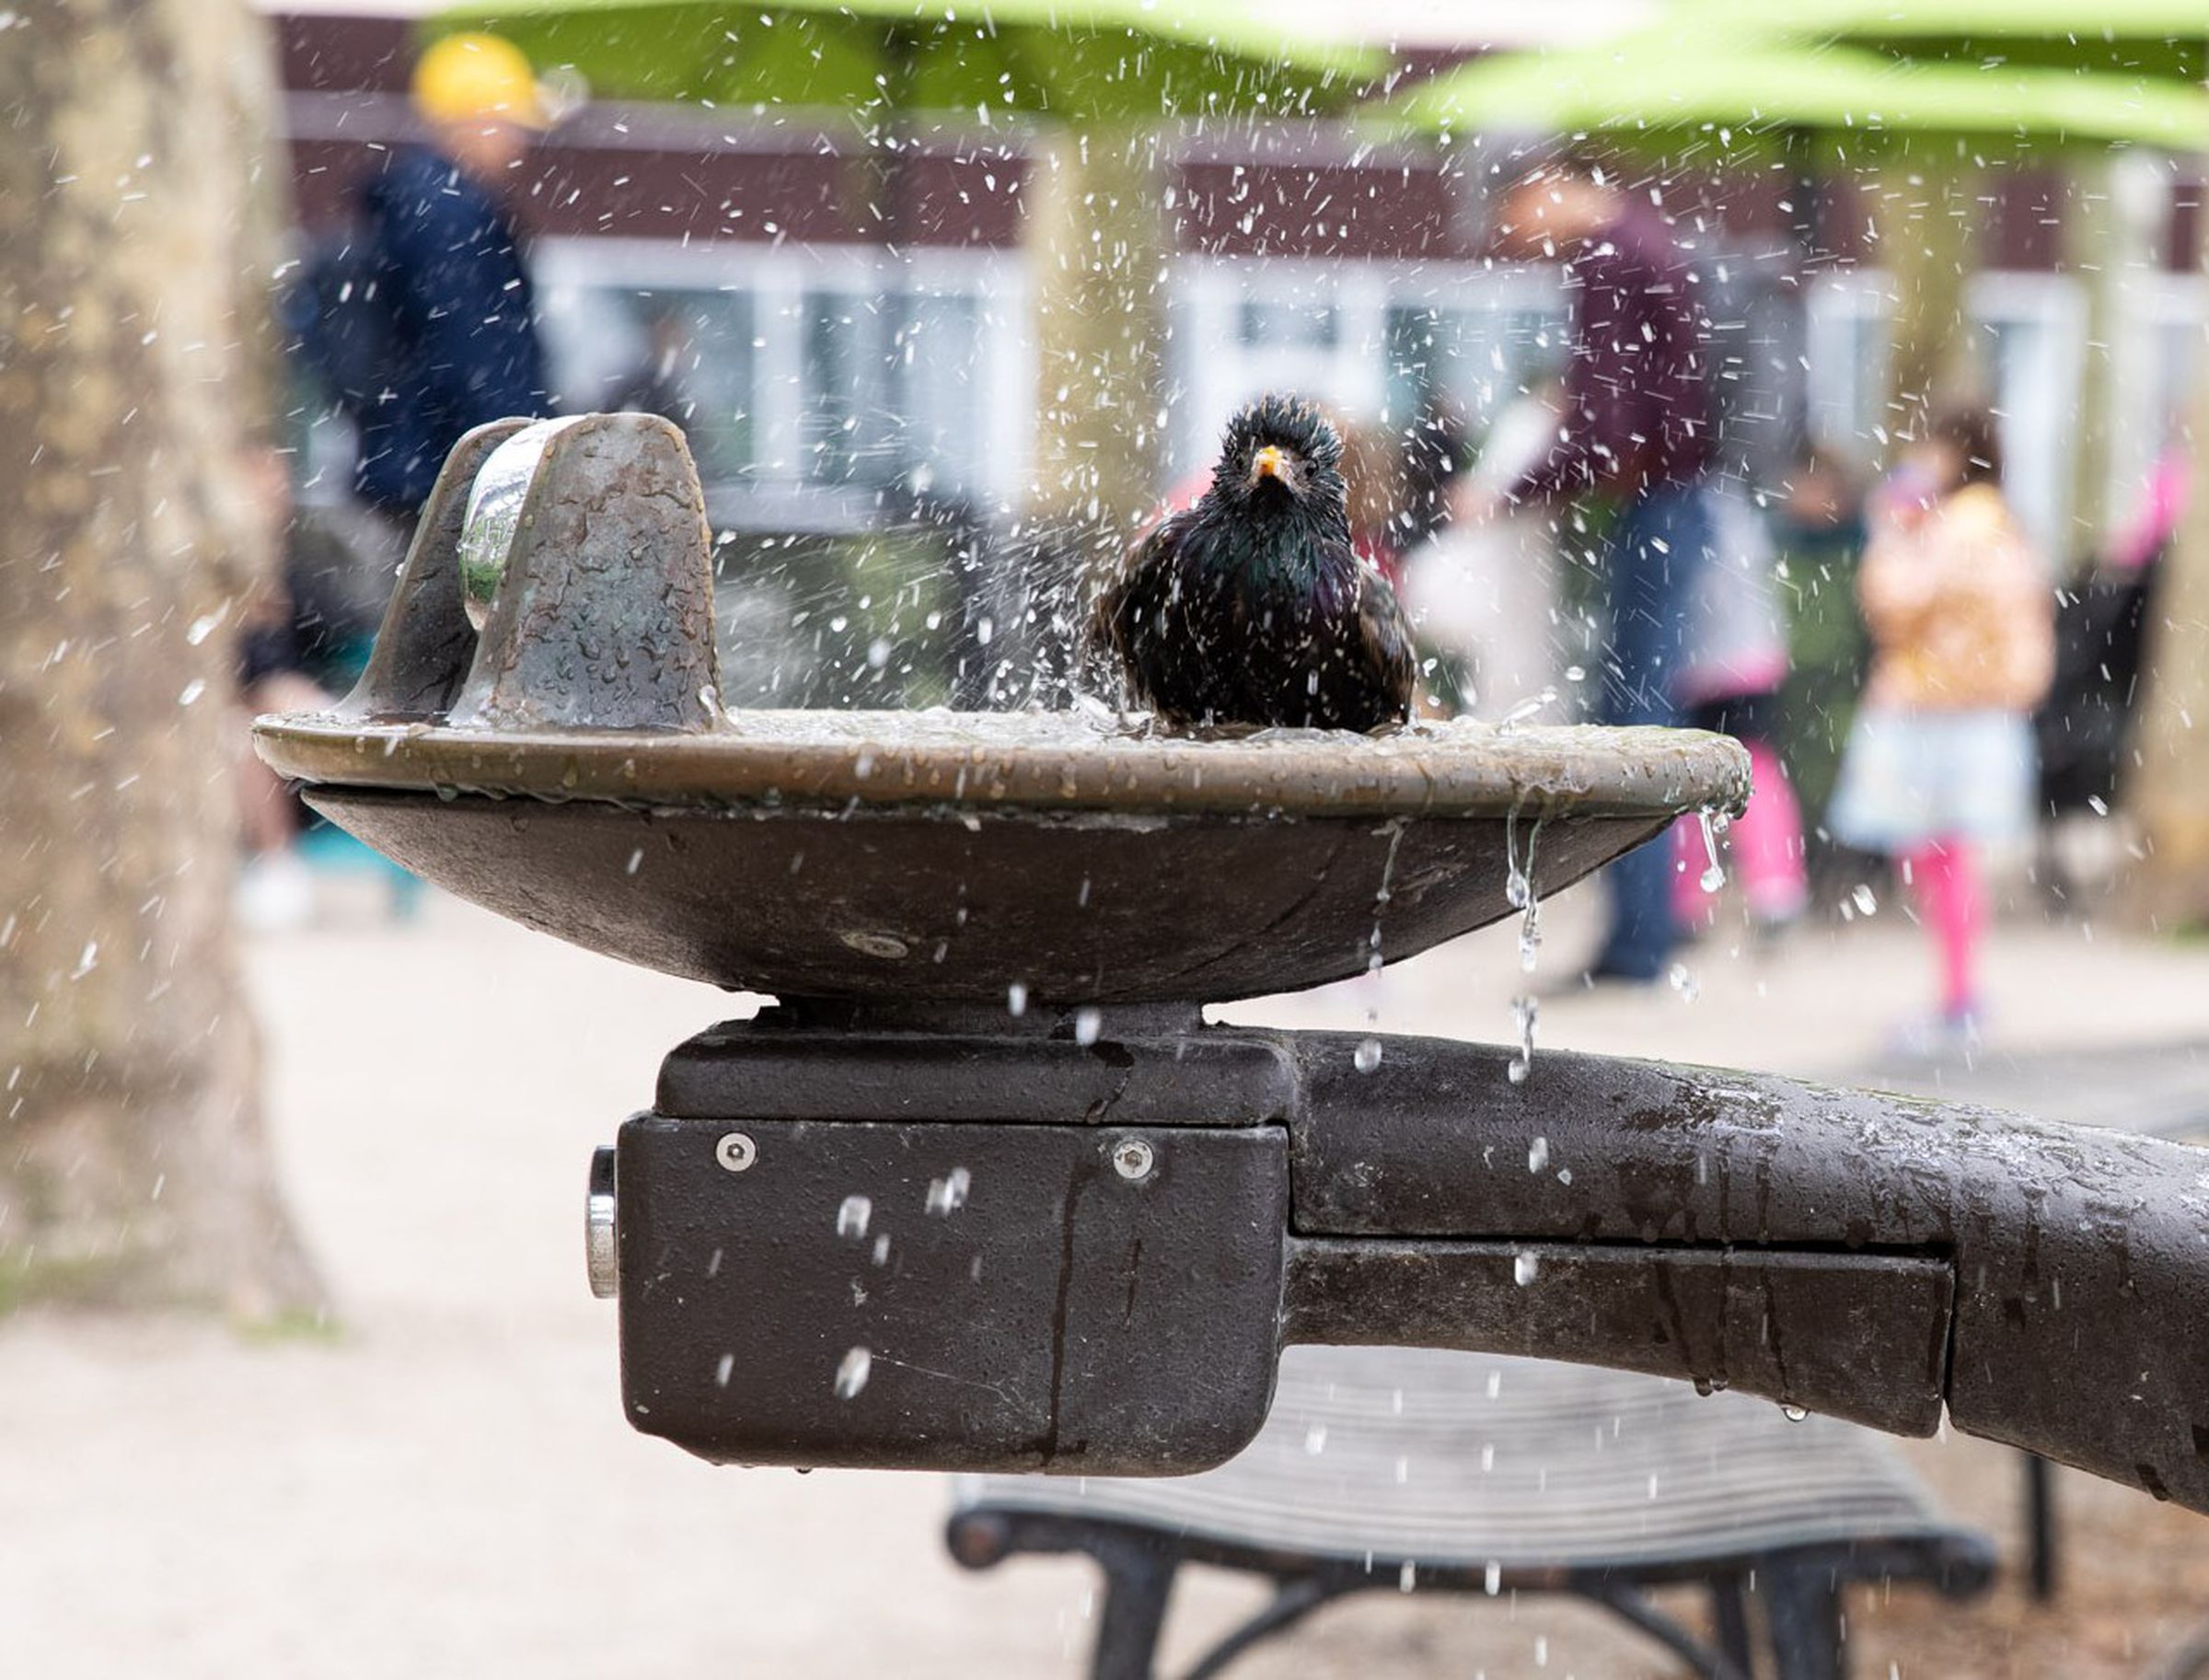 This fountain has become a birdbath. A bird splashes water everywhere.